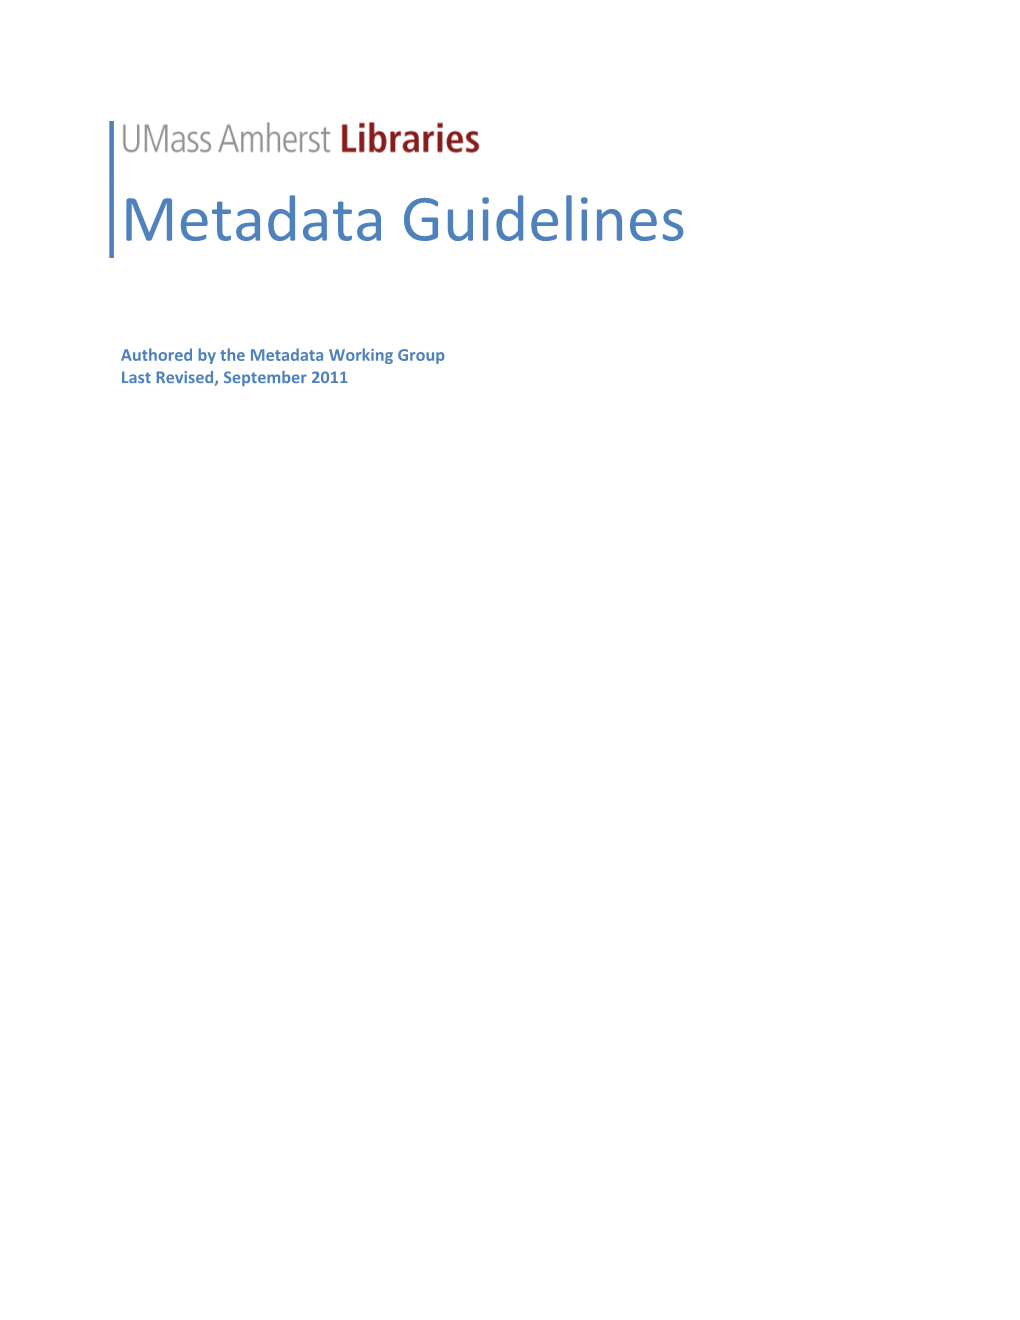 Content Standards for Metadata 5